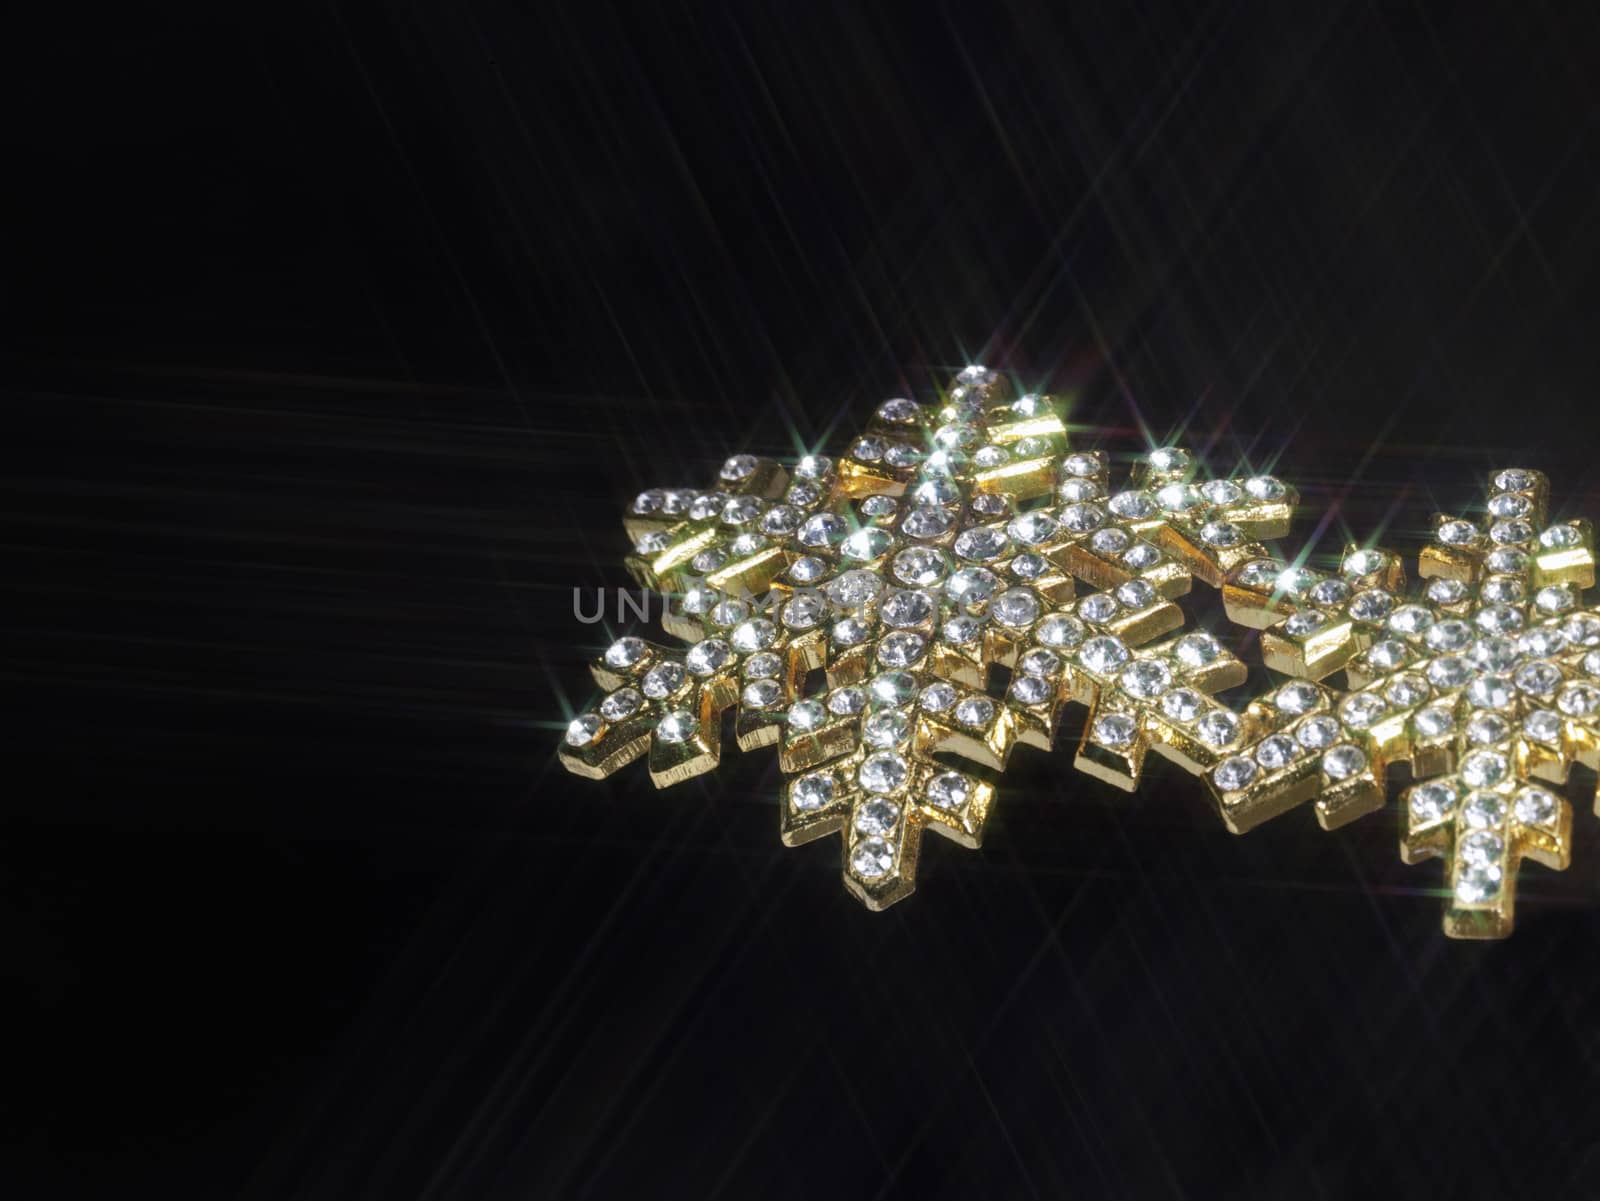 shiny jewellery in dark back by gewoldi